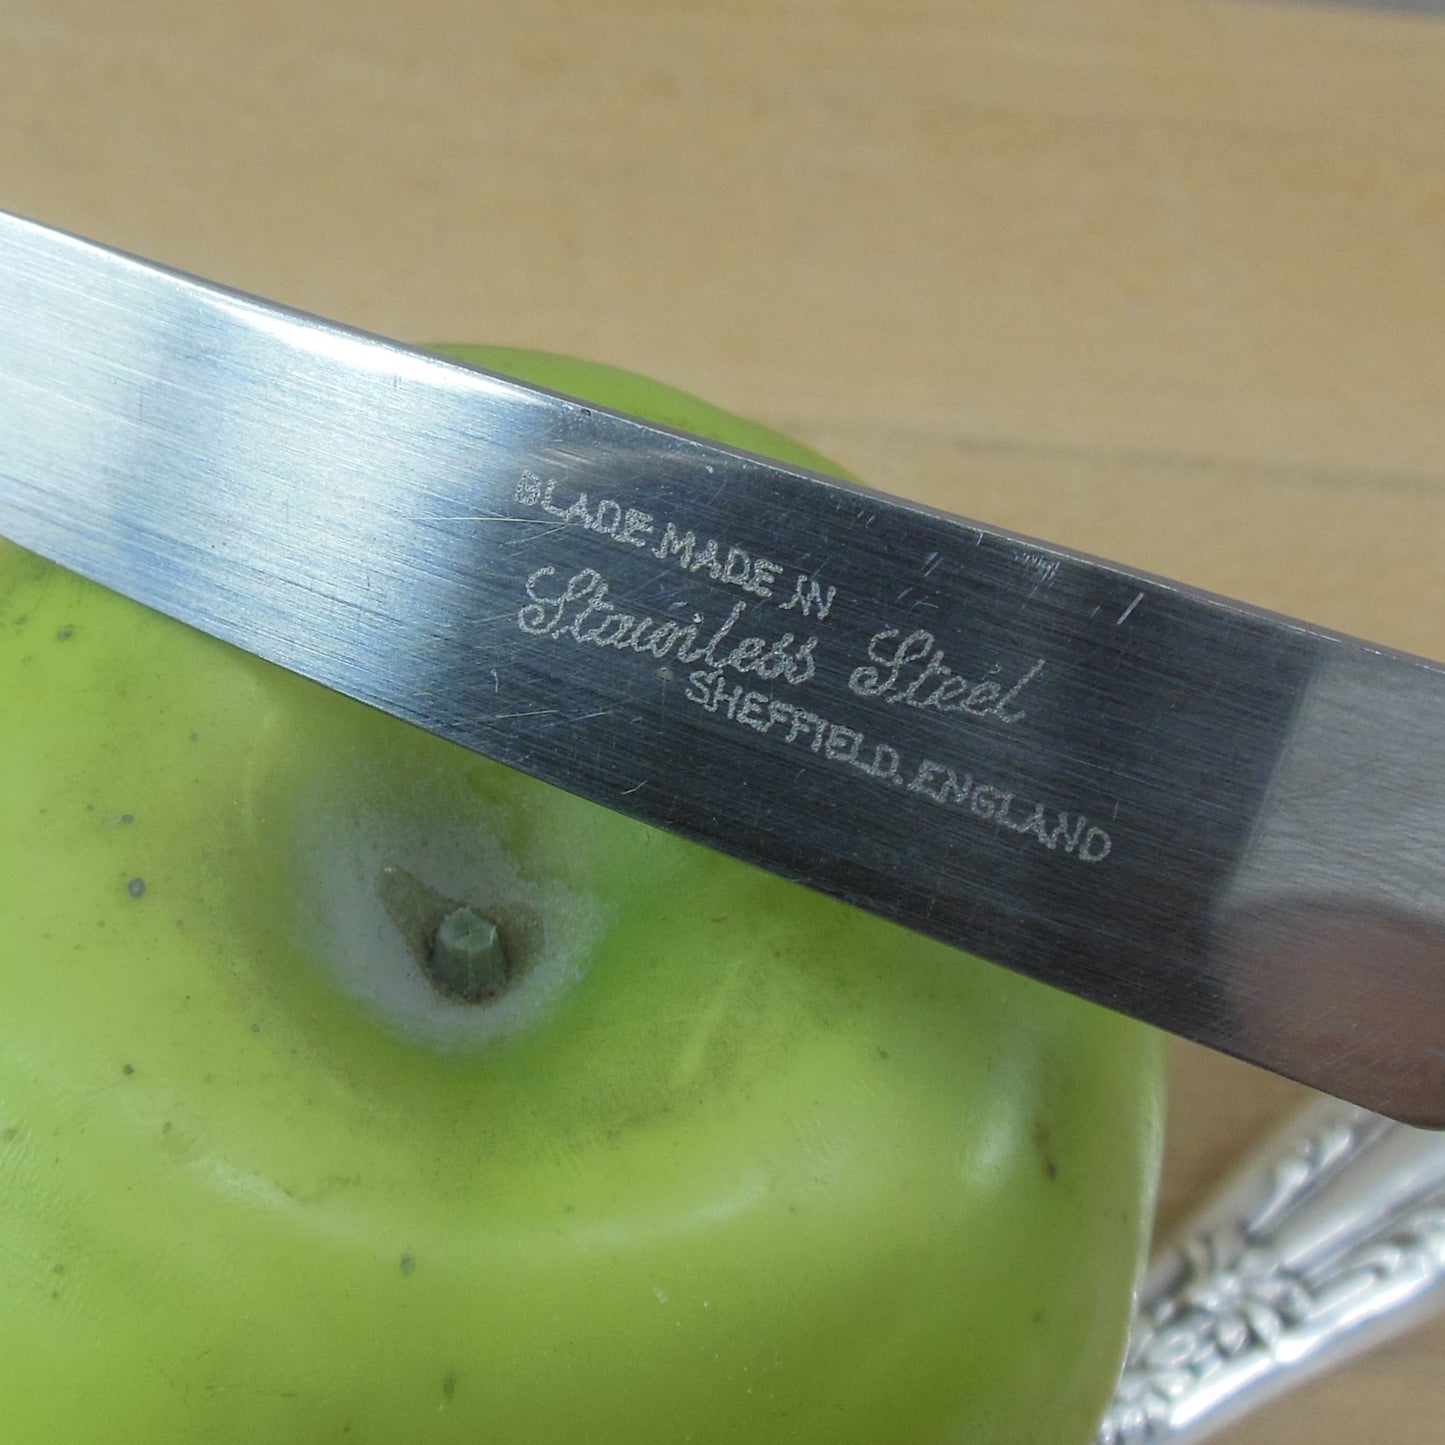 R. Blackinton Daisy Sterling Silver Handle Steak Knife - 3 Set Stainless Blade